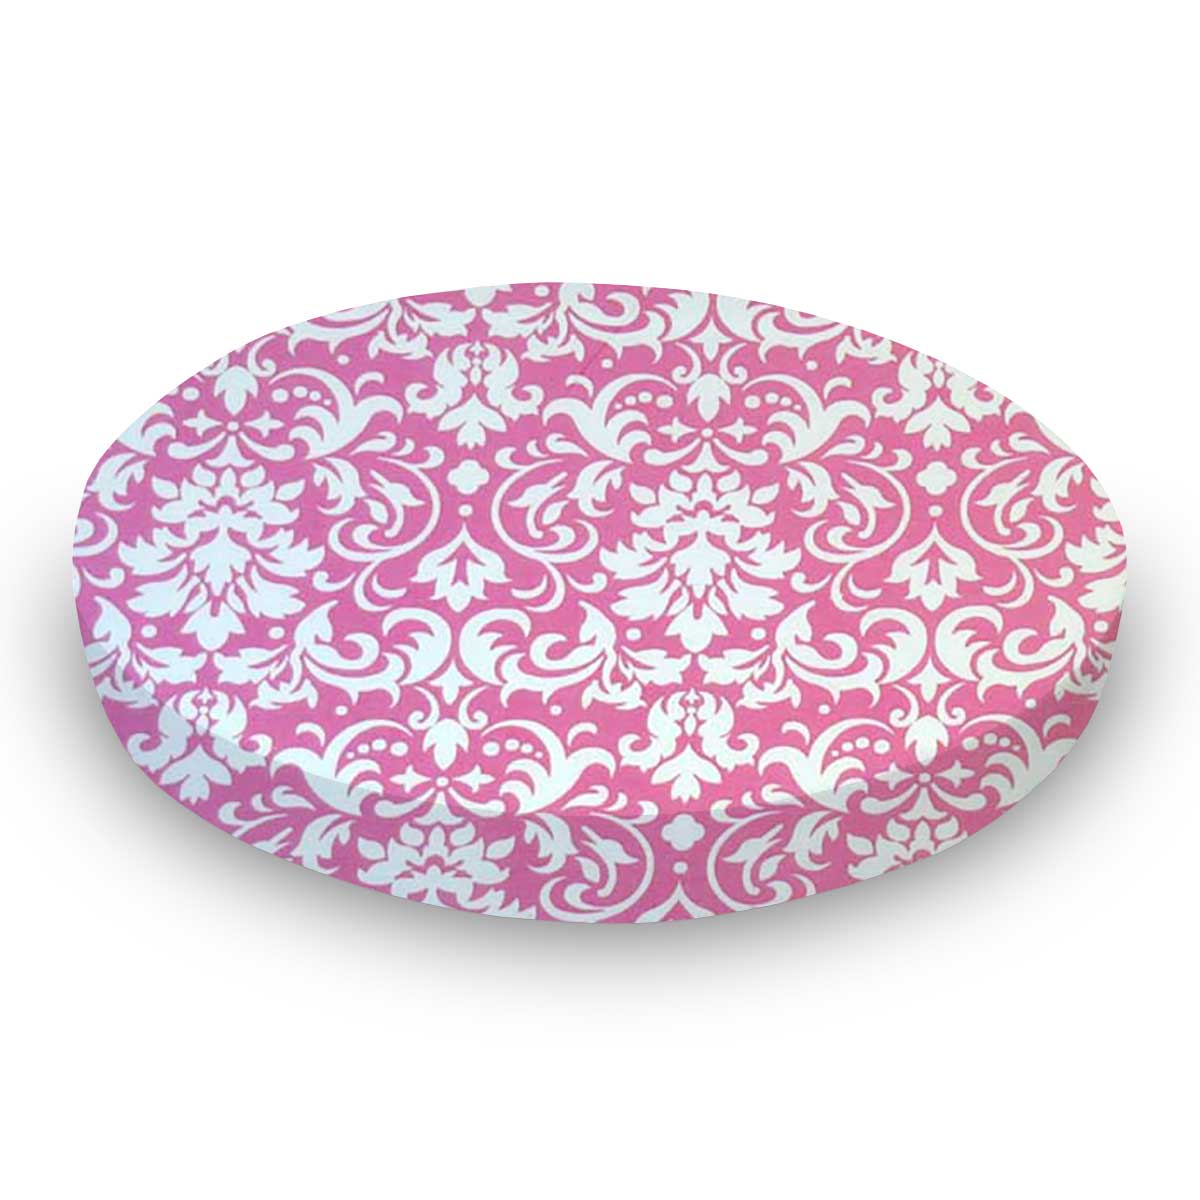 Oval Crib (Stokke Sleepi) - Pink Damask - Fitted  Oval